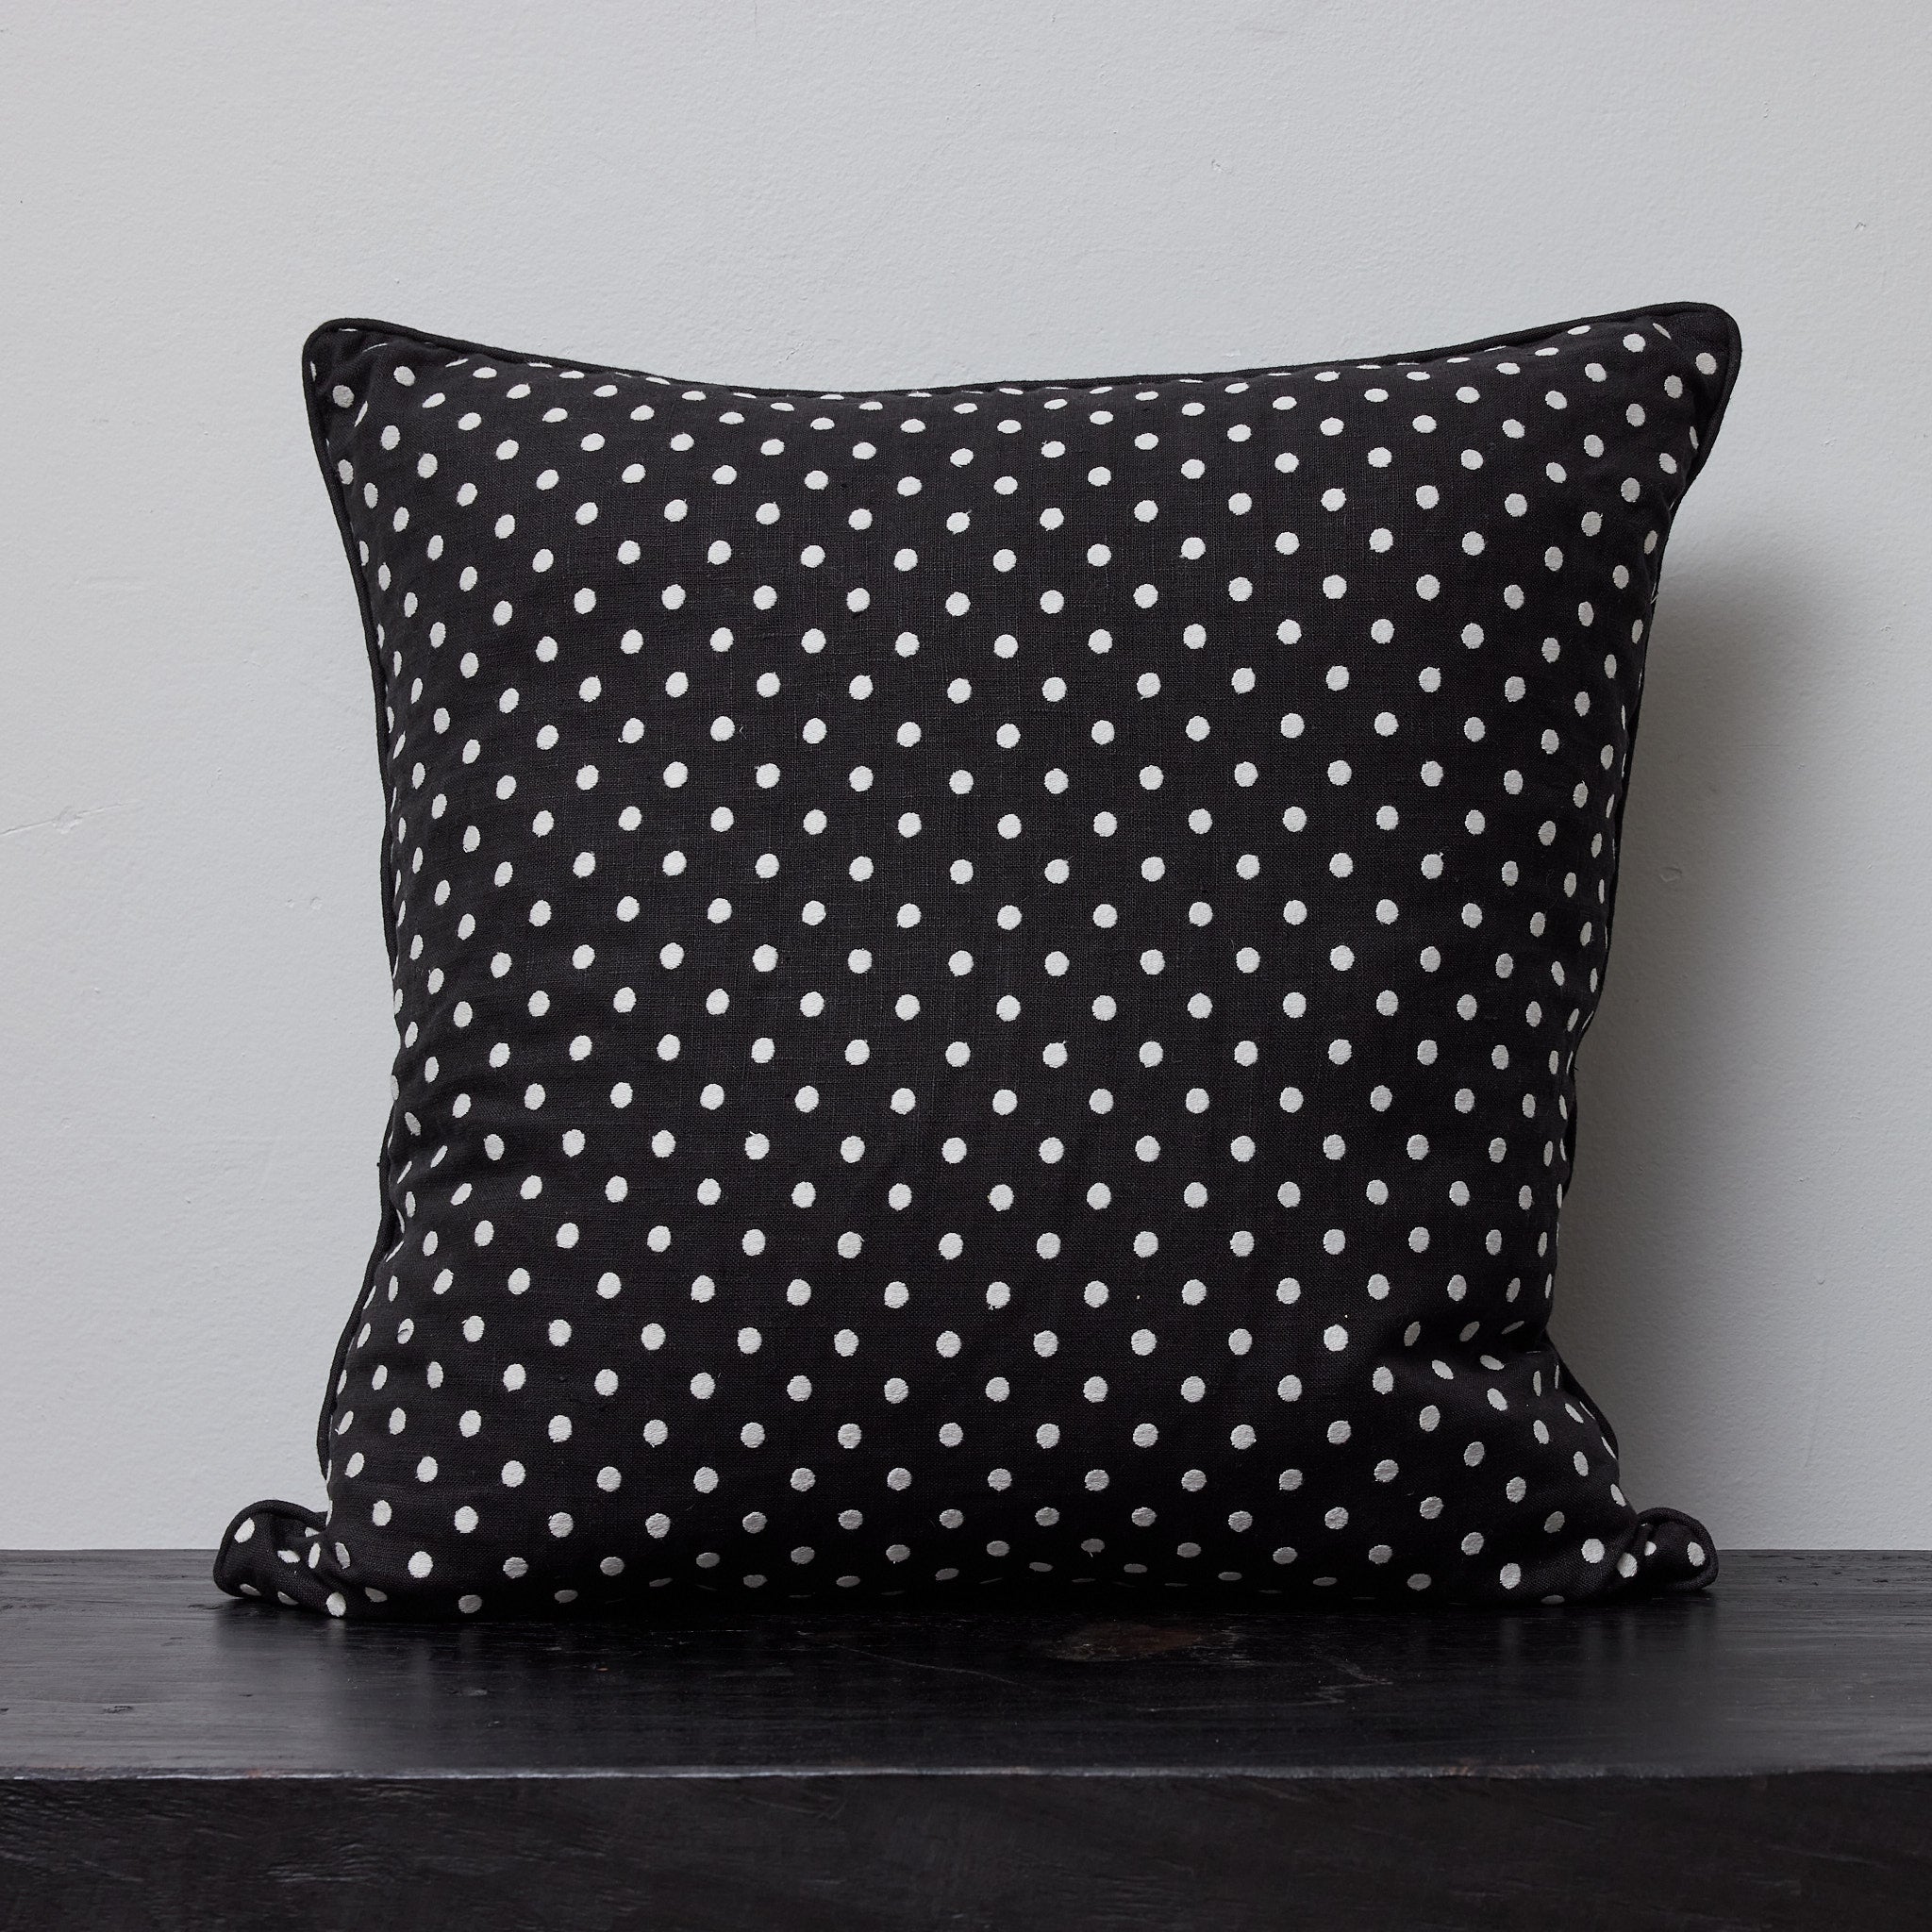 Polka embroidered cushion